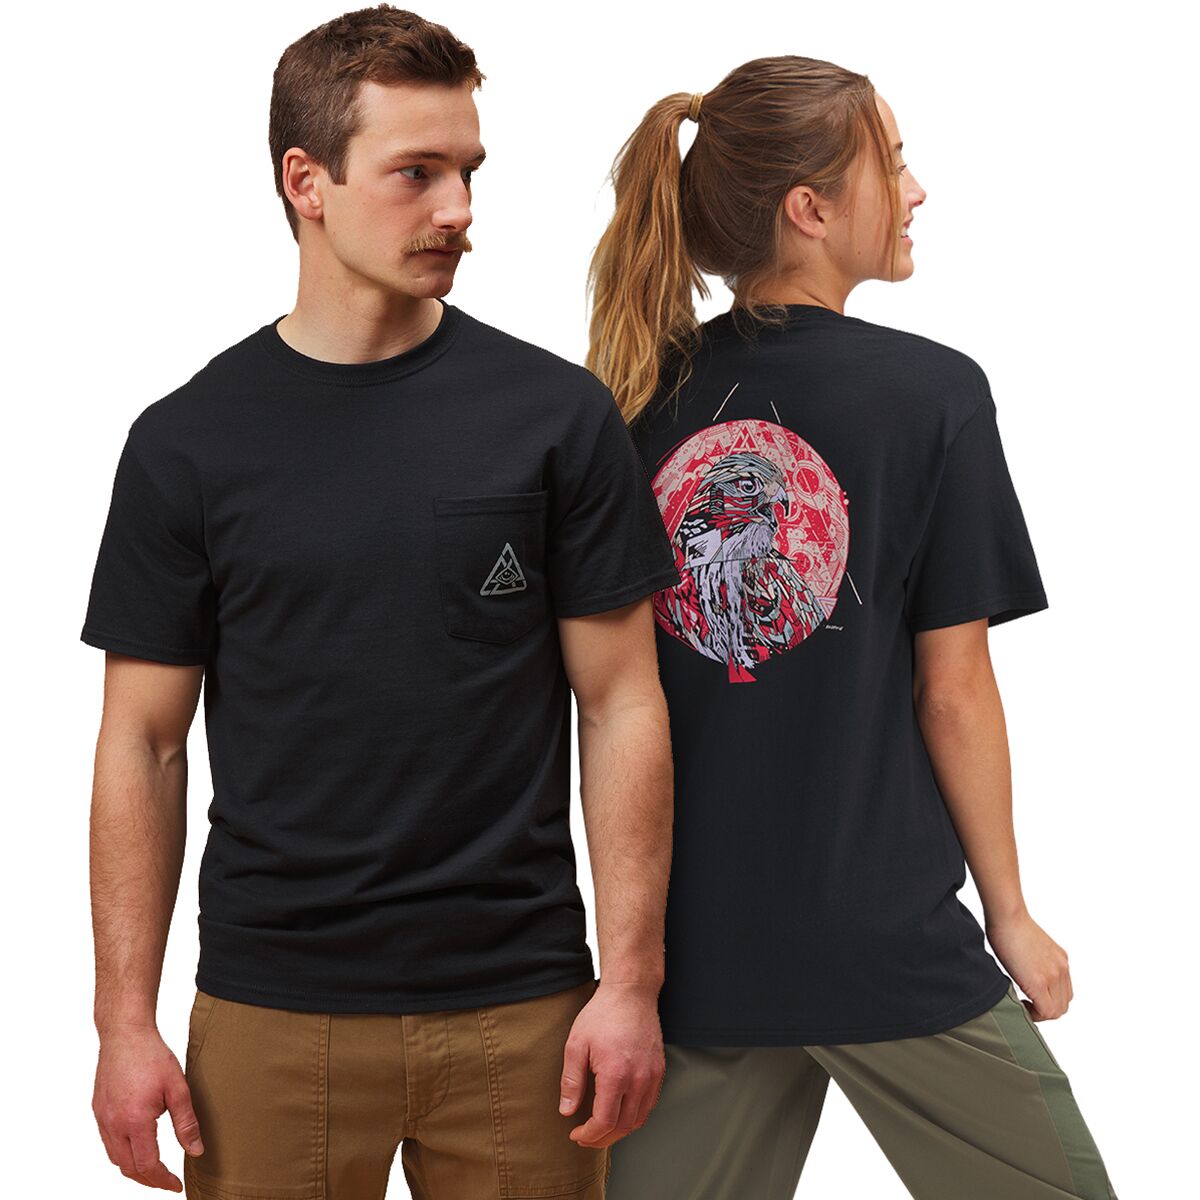 Backcountry Natural Selection Tour BC Merlin Short-Sleeve T-Shirt